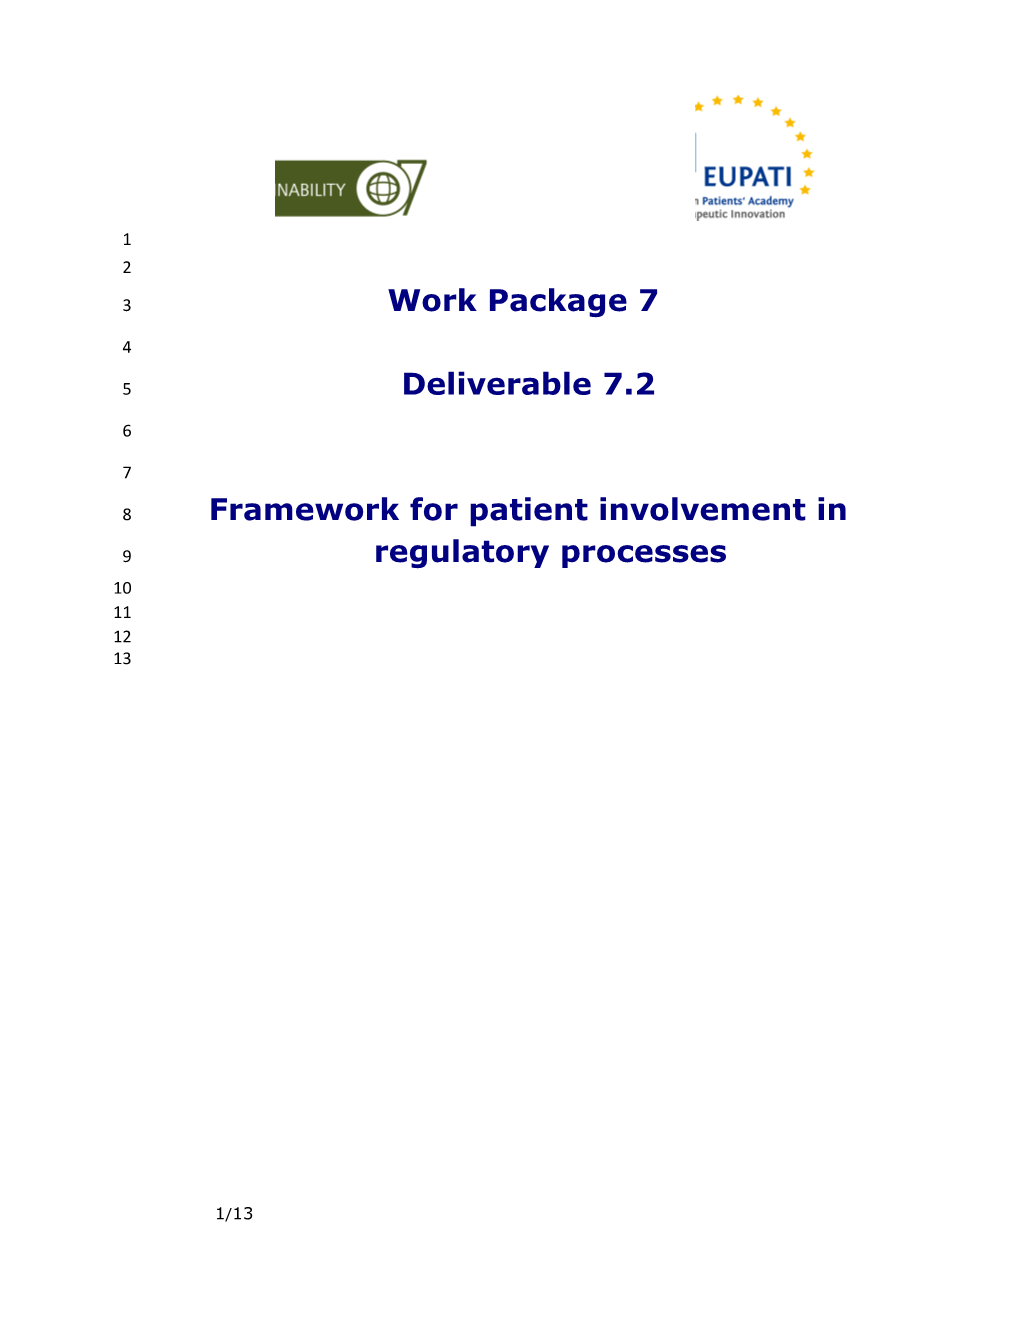 Framework Forpatient Involvement in Regulatory Processes